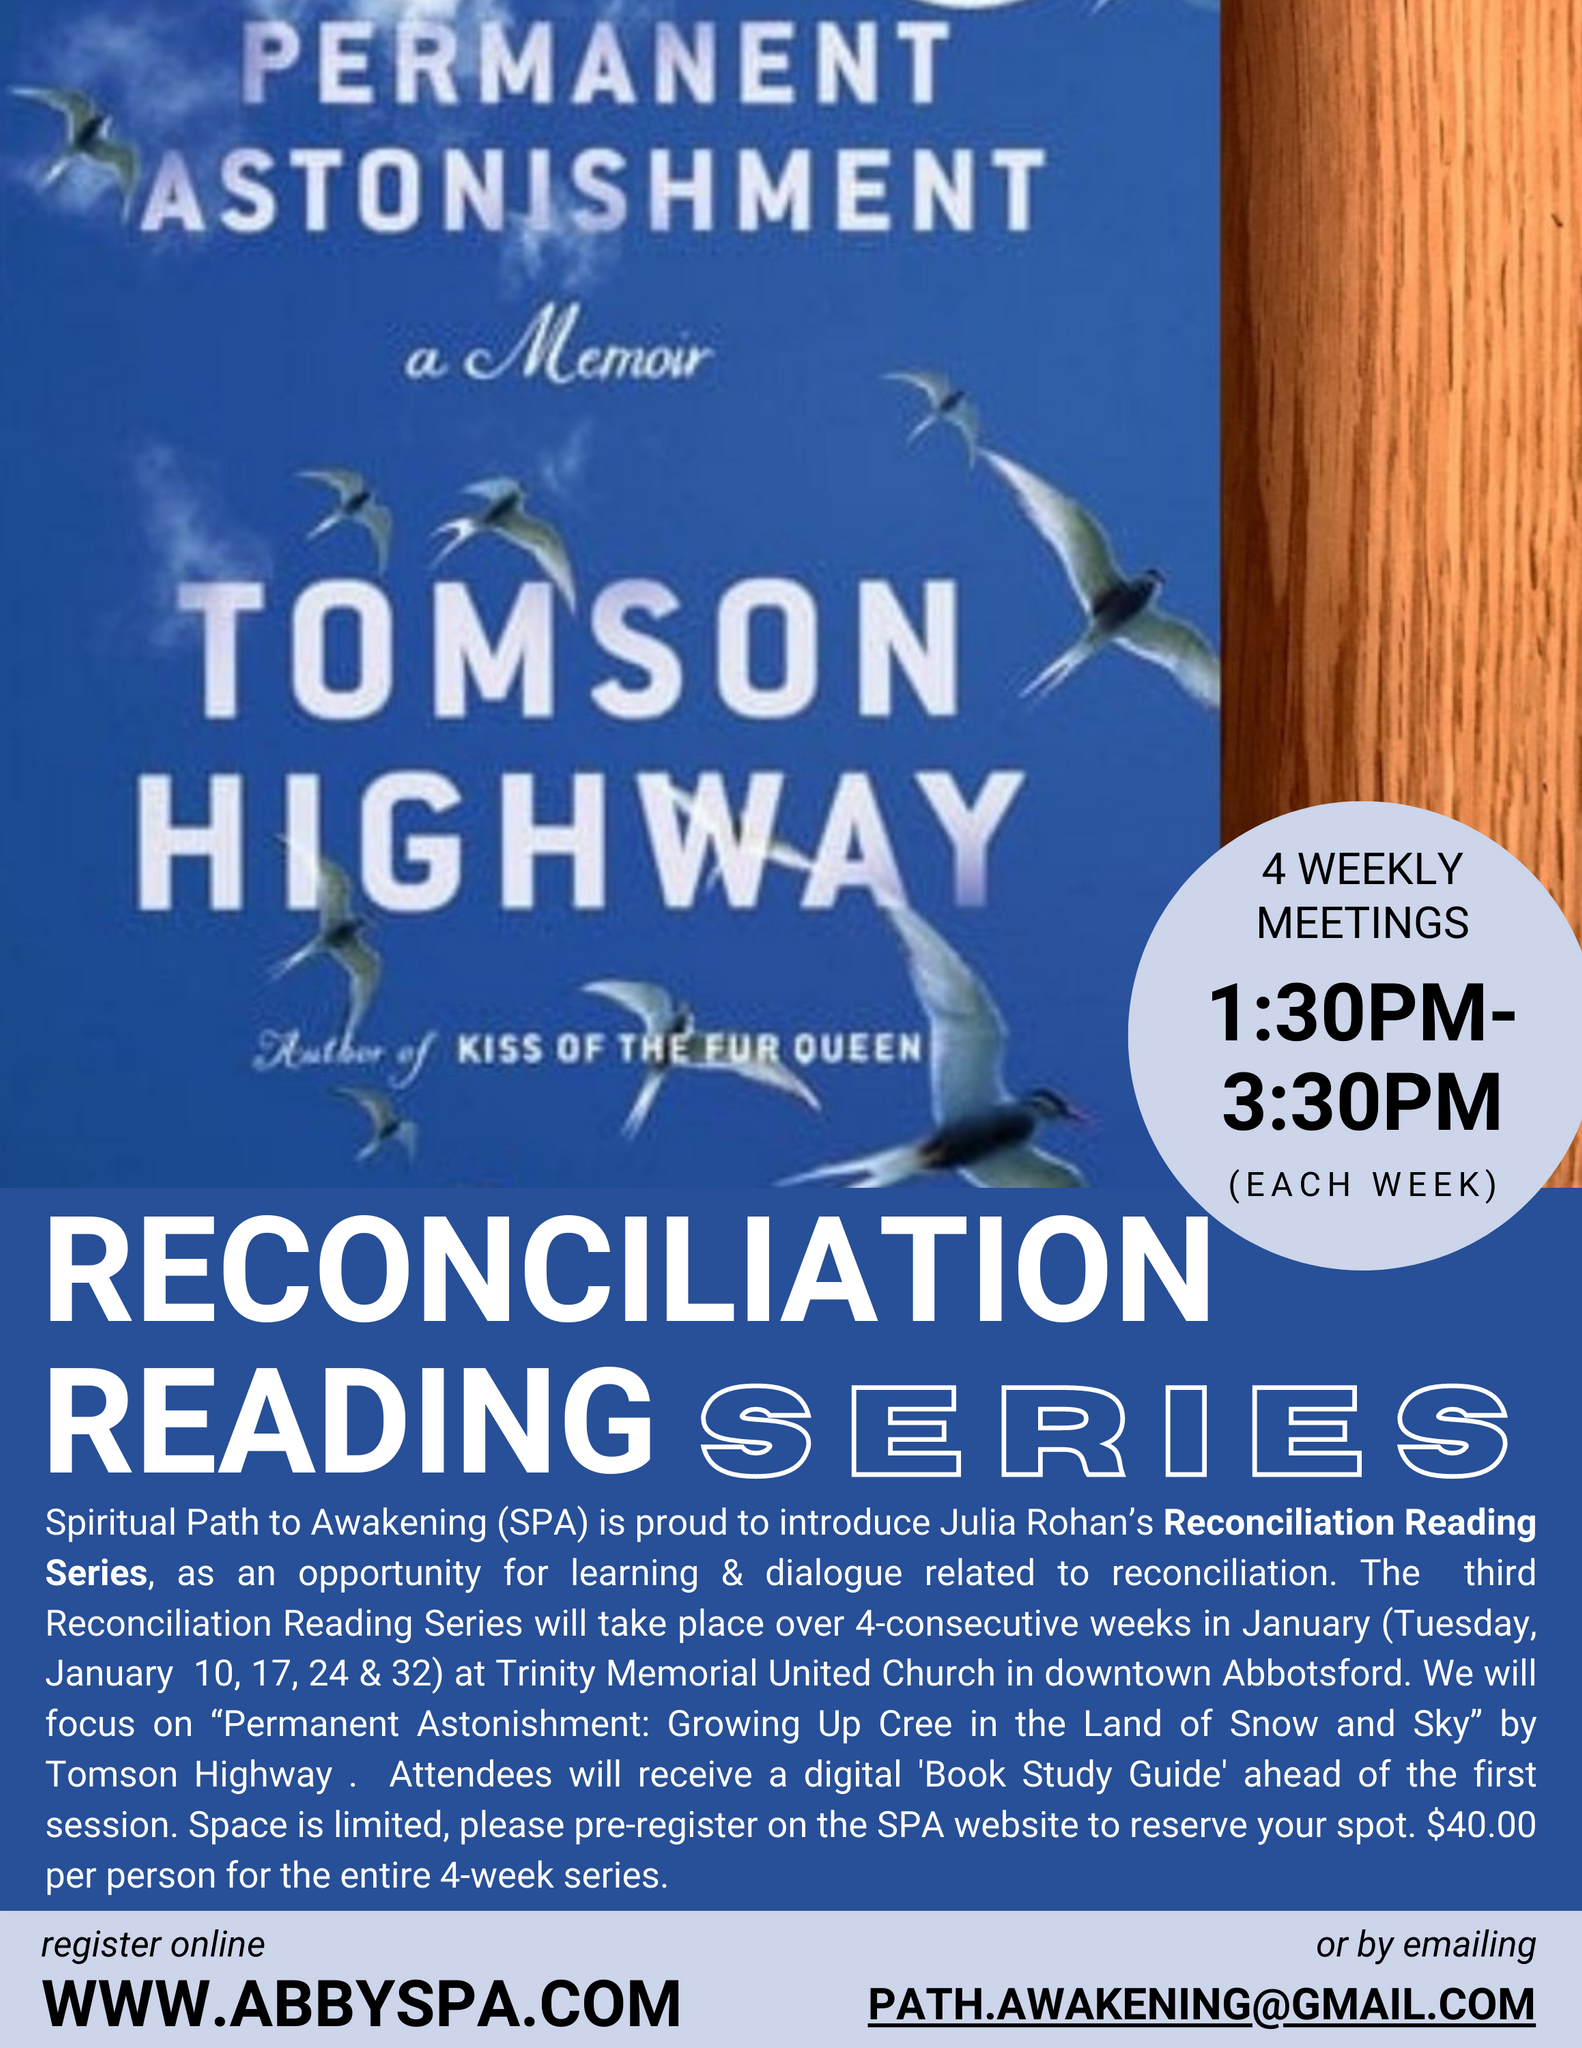 Reconciliation Reading Series (#3): “Permanent Astonishment”